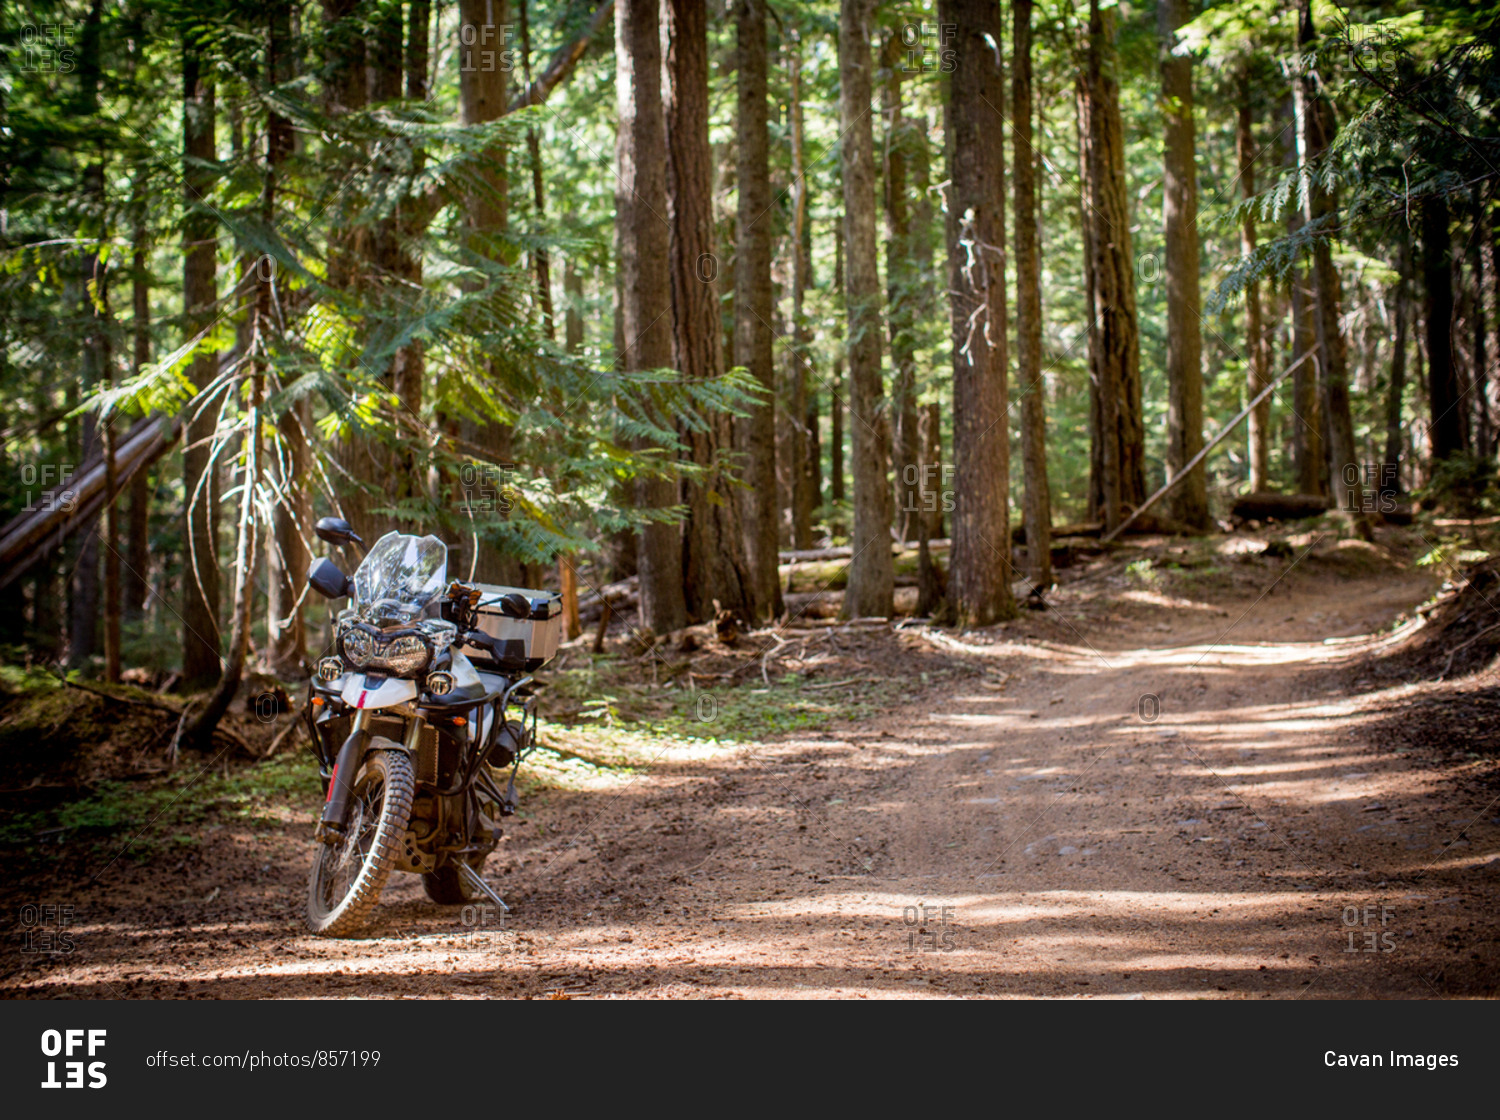 Adventure motorcycle ride down forest dirt road, near mt. hood oregon